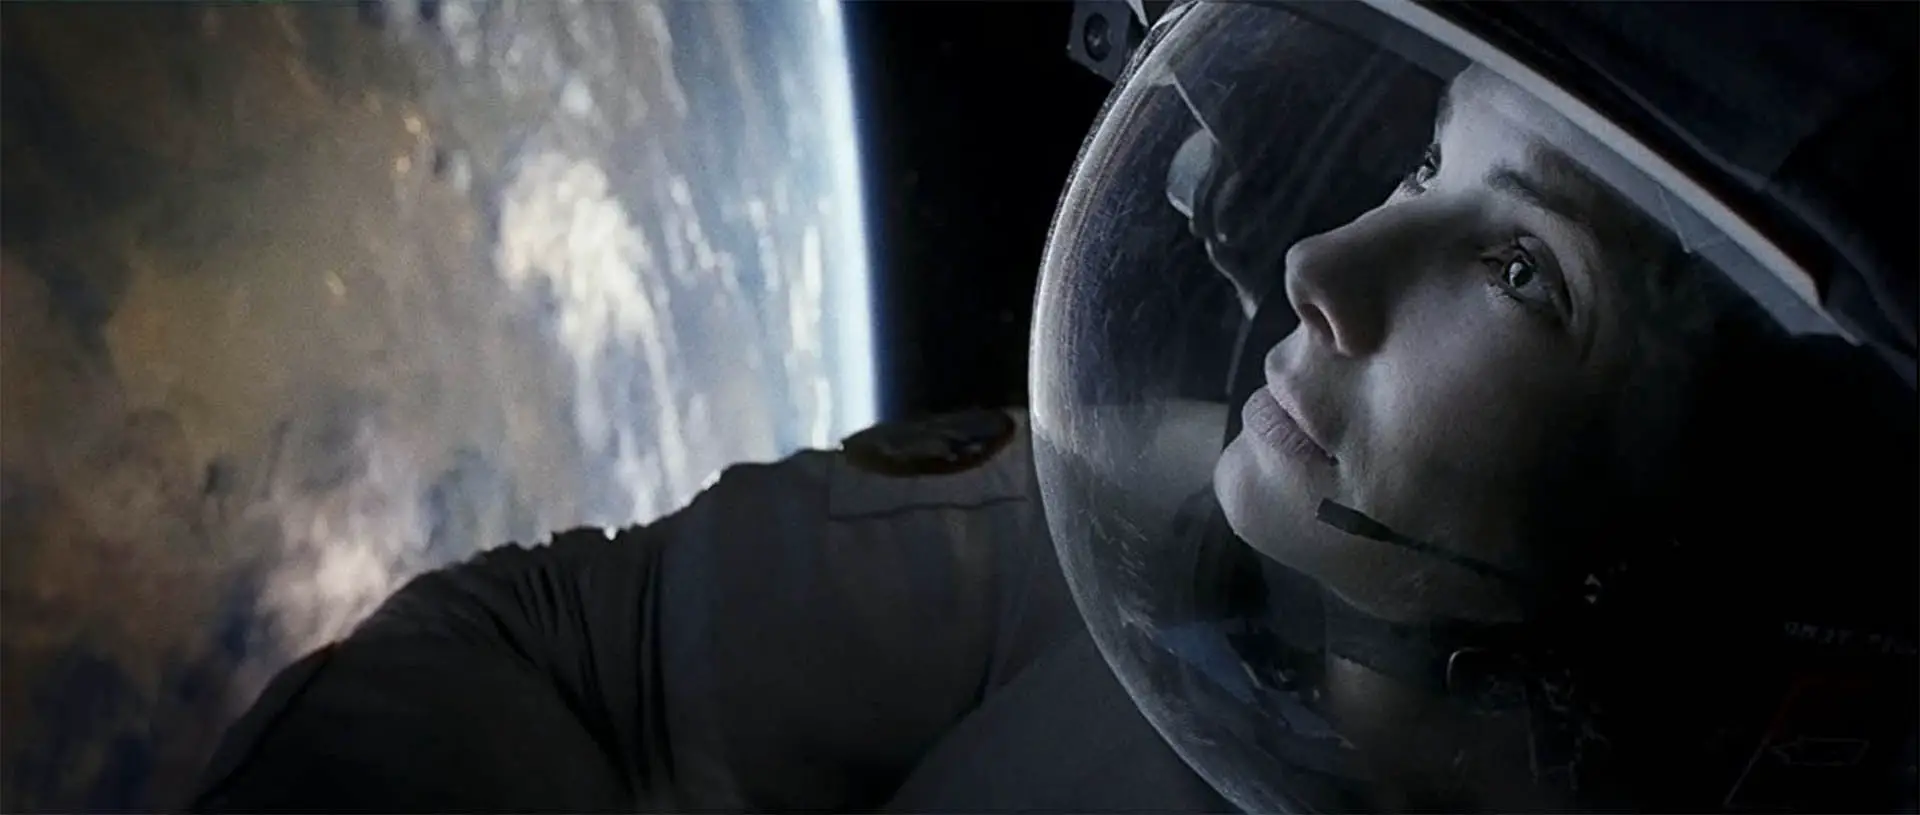 Gravity (2013) starring Sandra Bullock